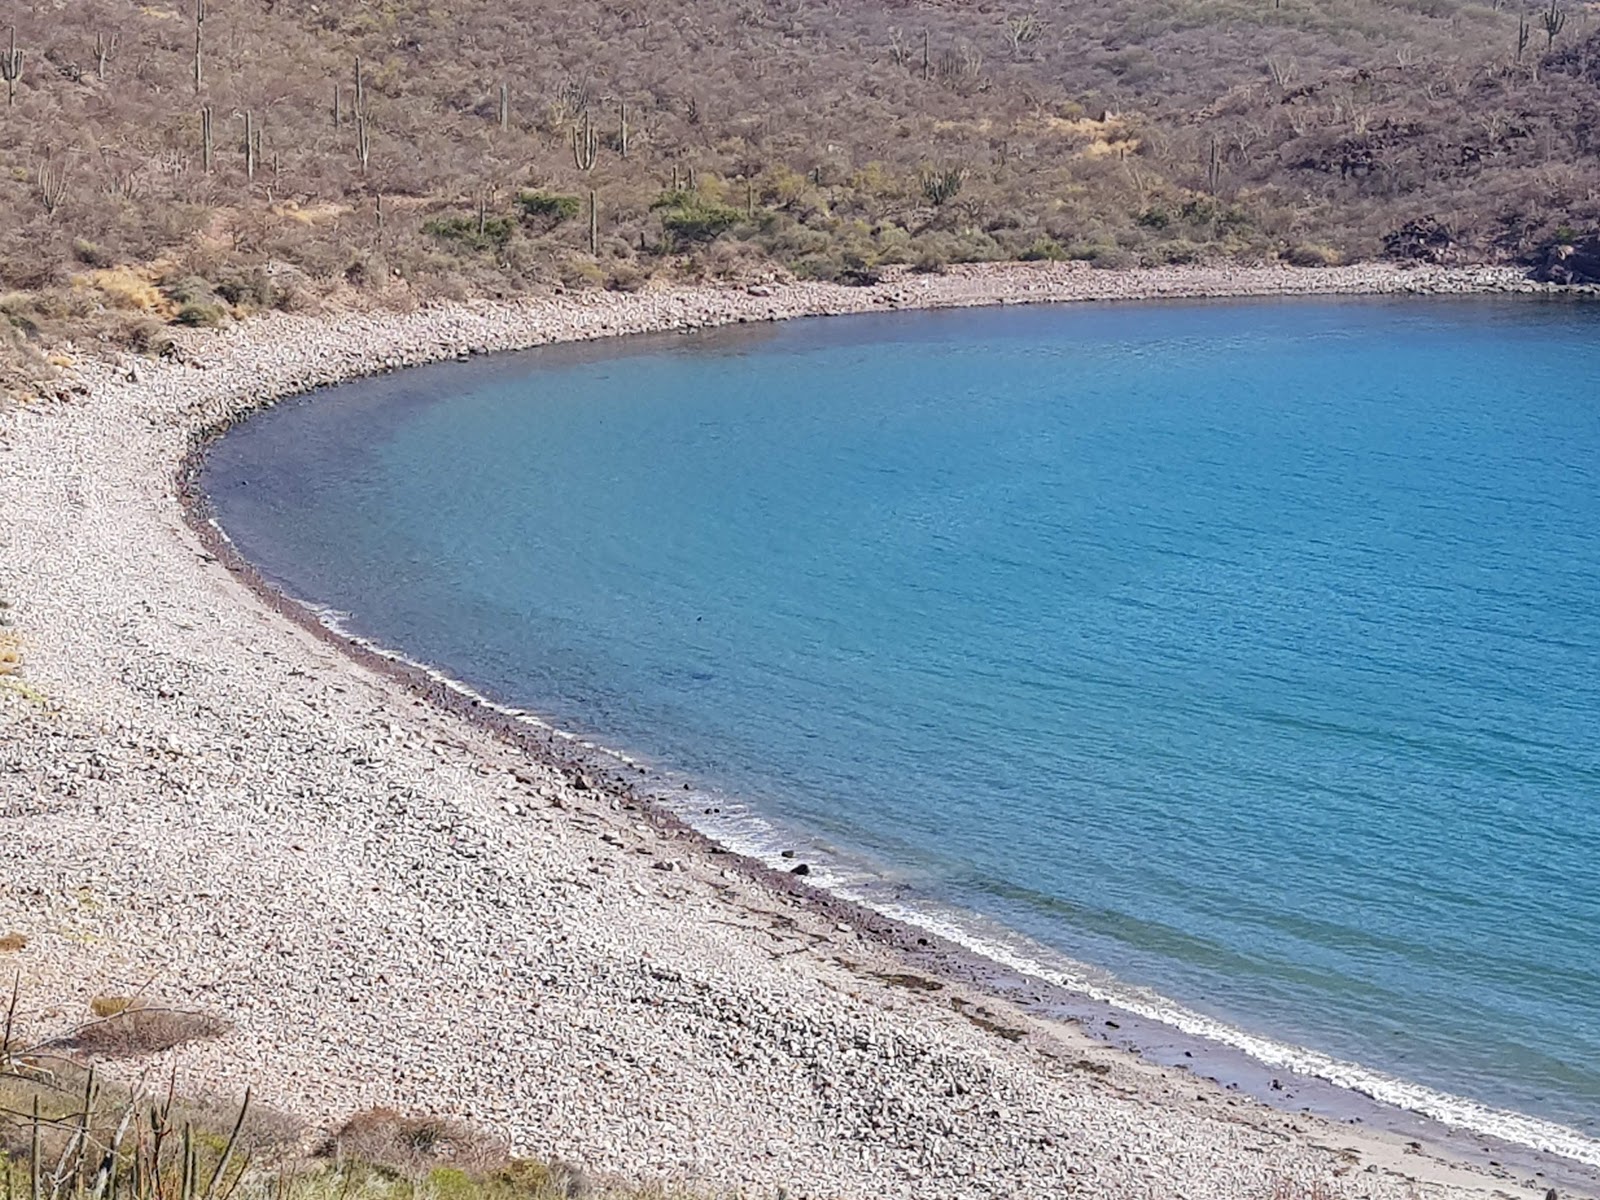 Fotografija El carricito beach z sivi kamenček površino